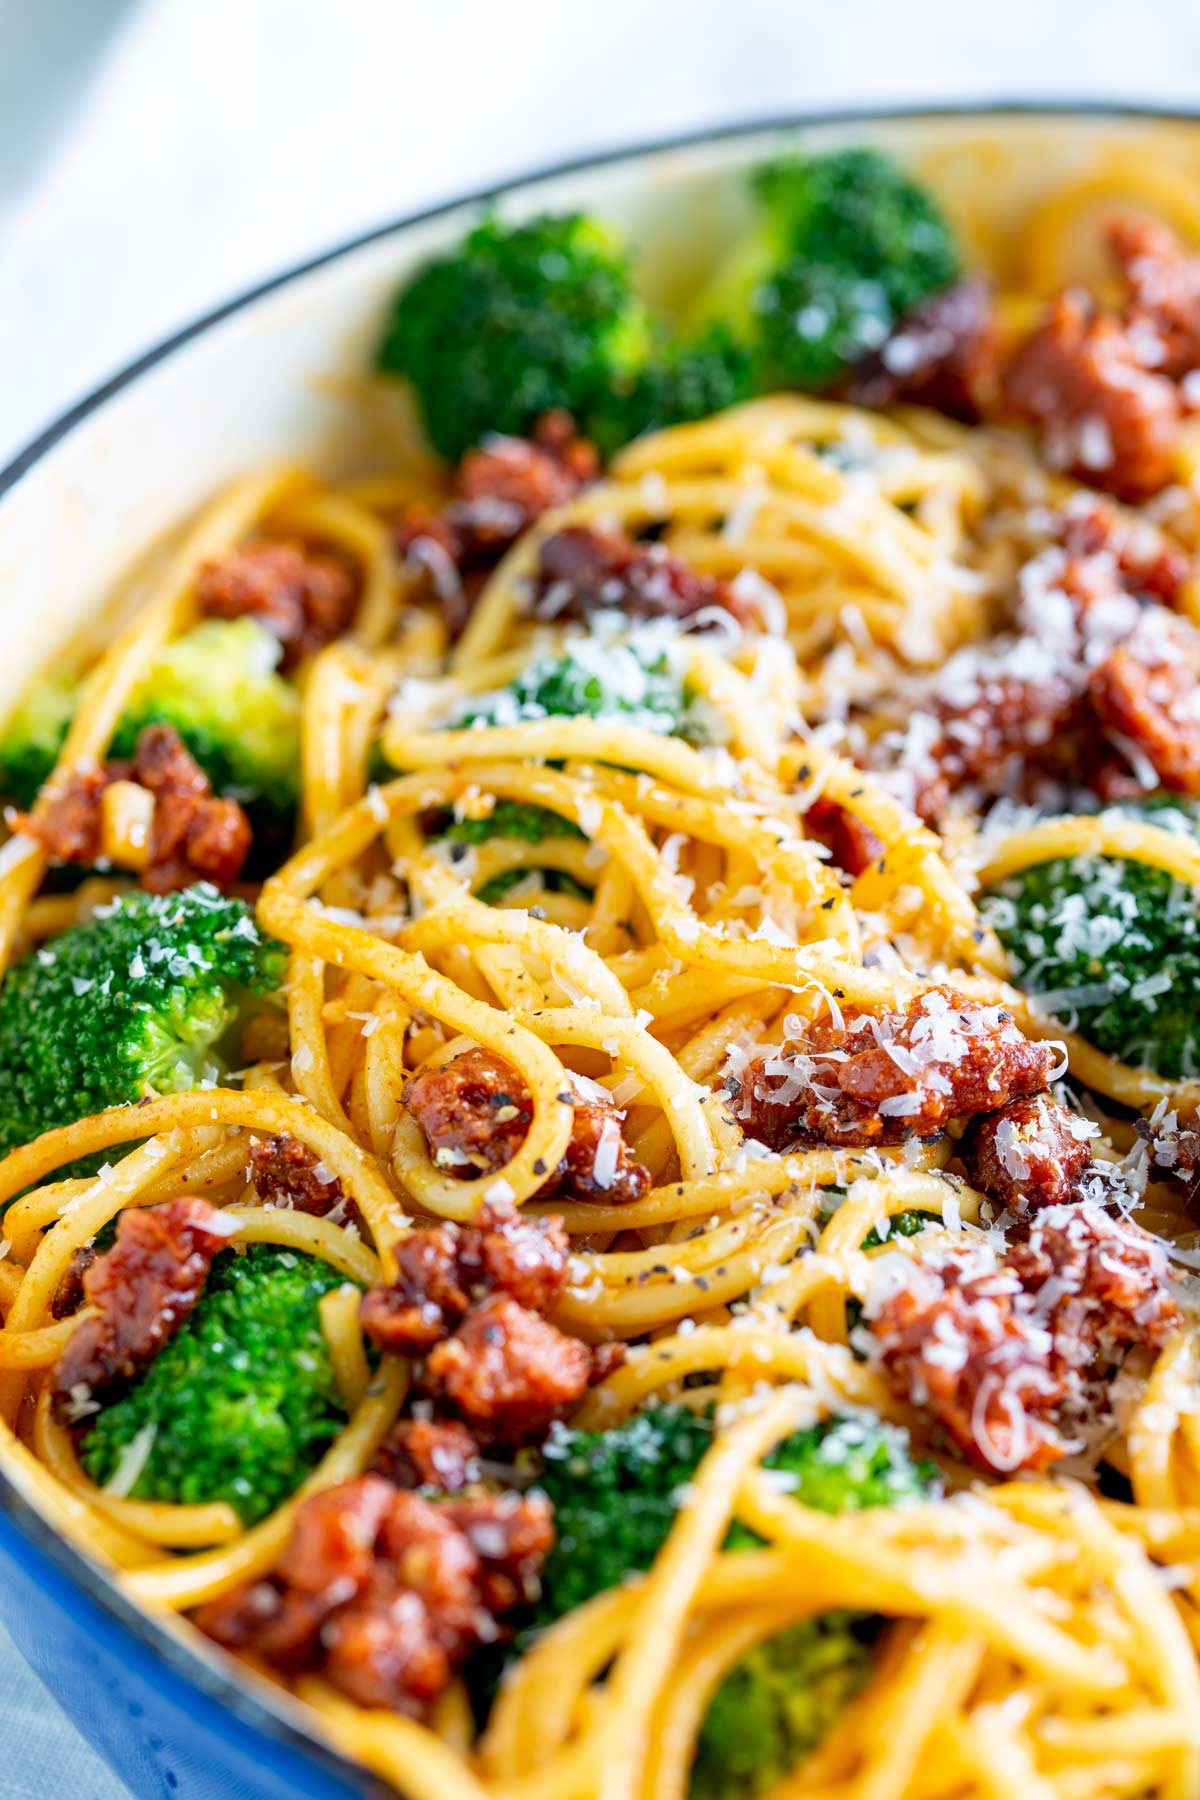 chorizo and broccoli stirred through pasta with parmesan